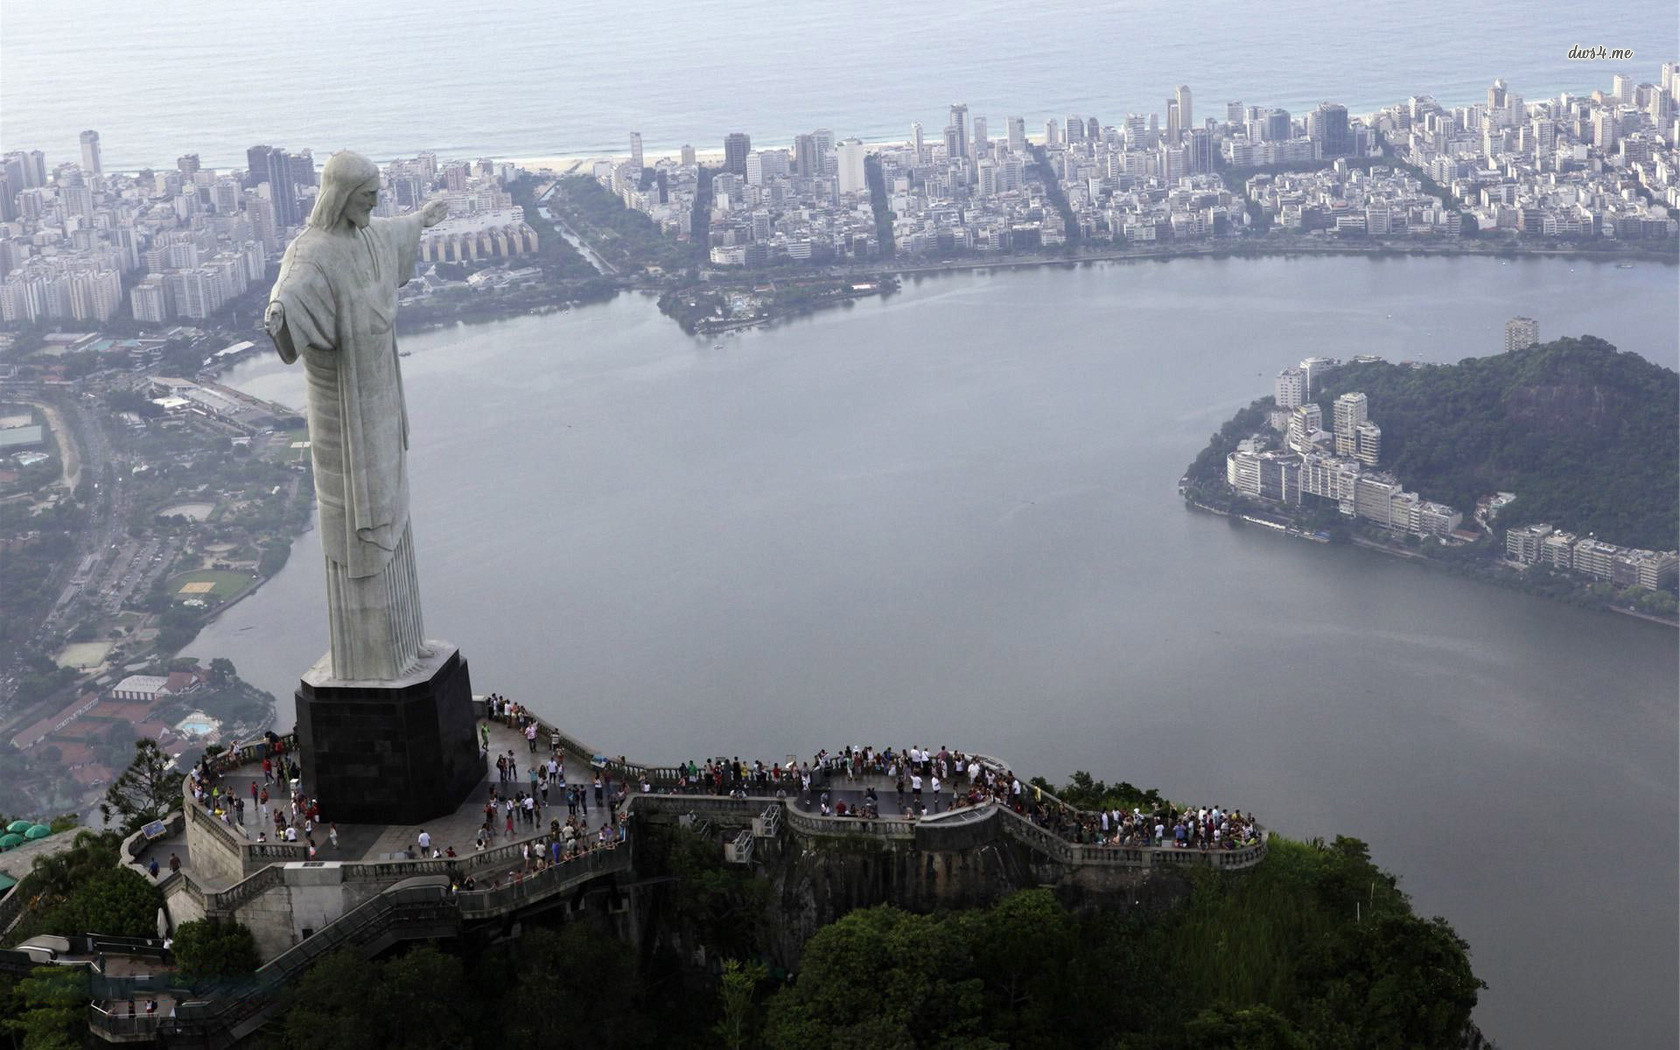 Statue Of Jesus Rio De Janeiro Wallpaper World